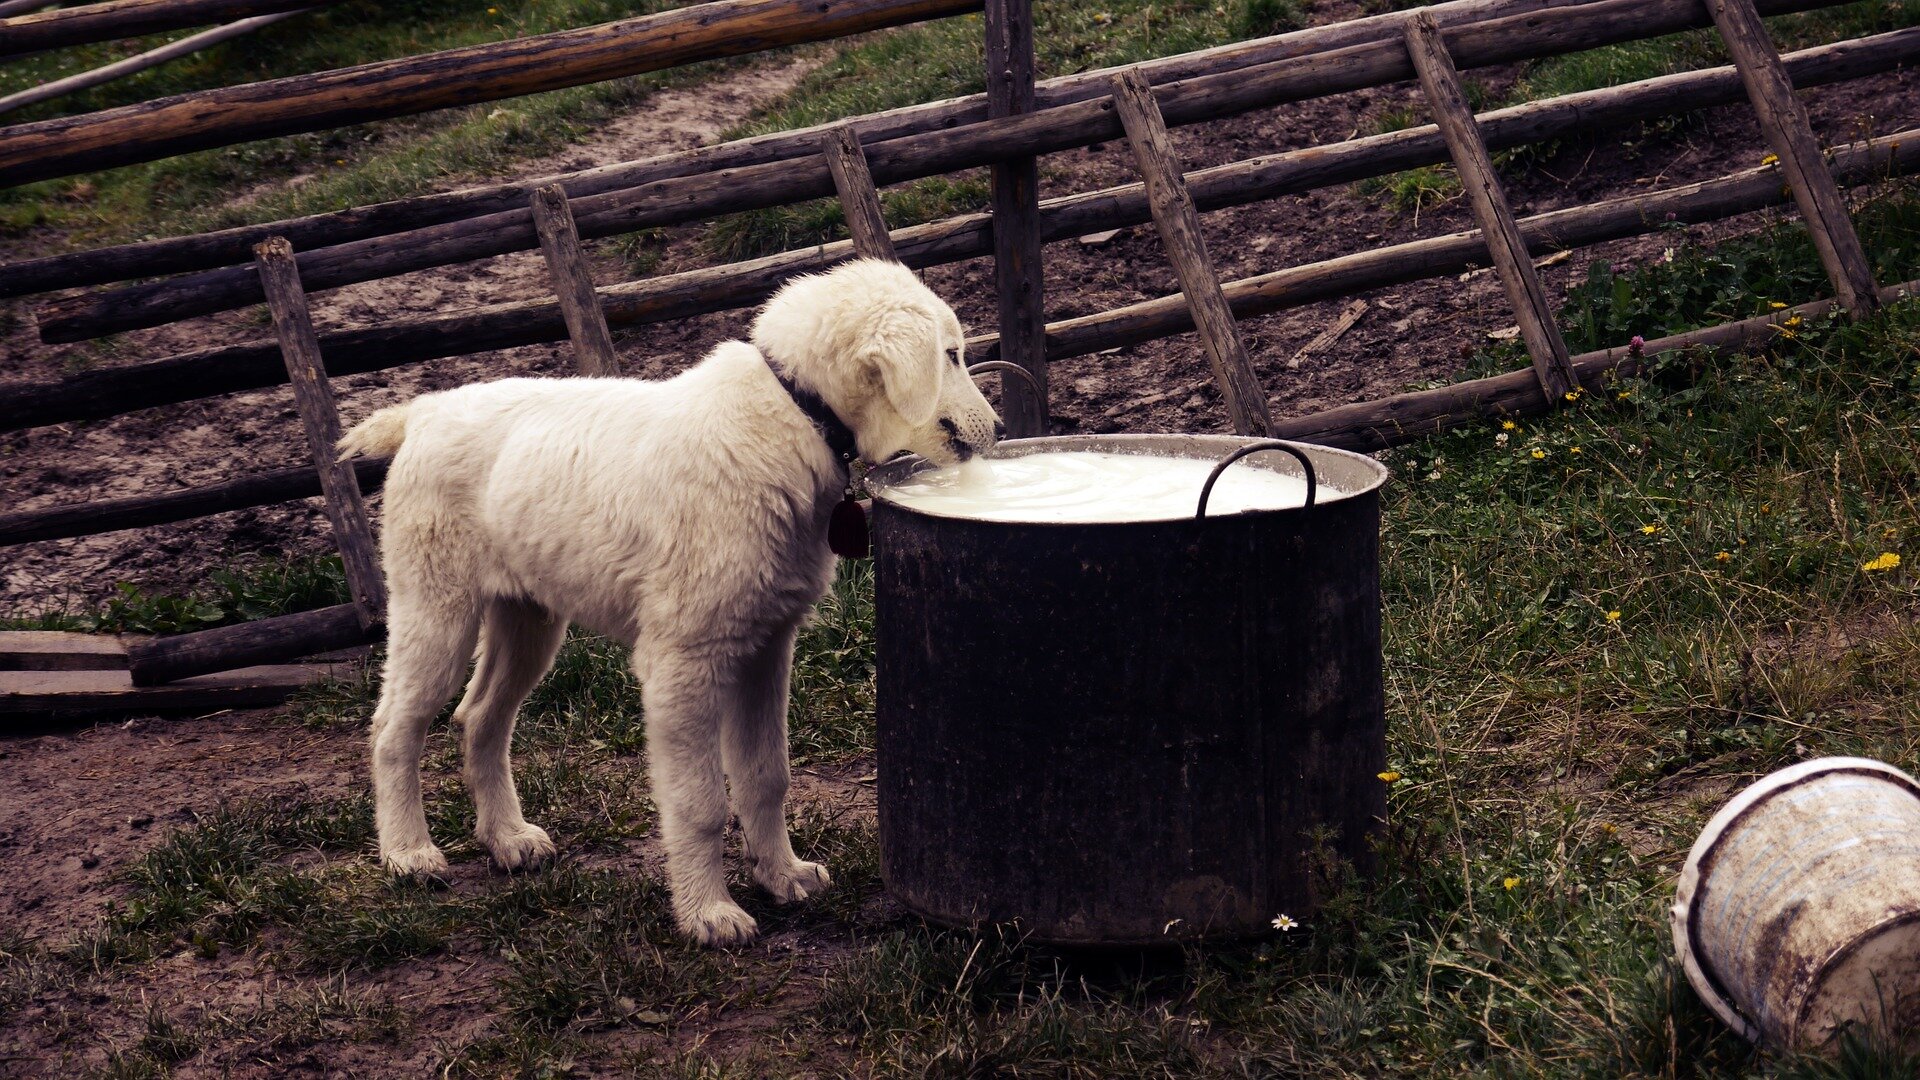 puppy drinking milk from the cauldron